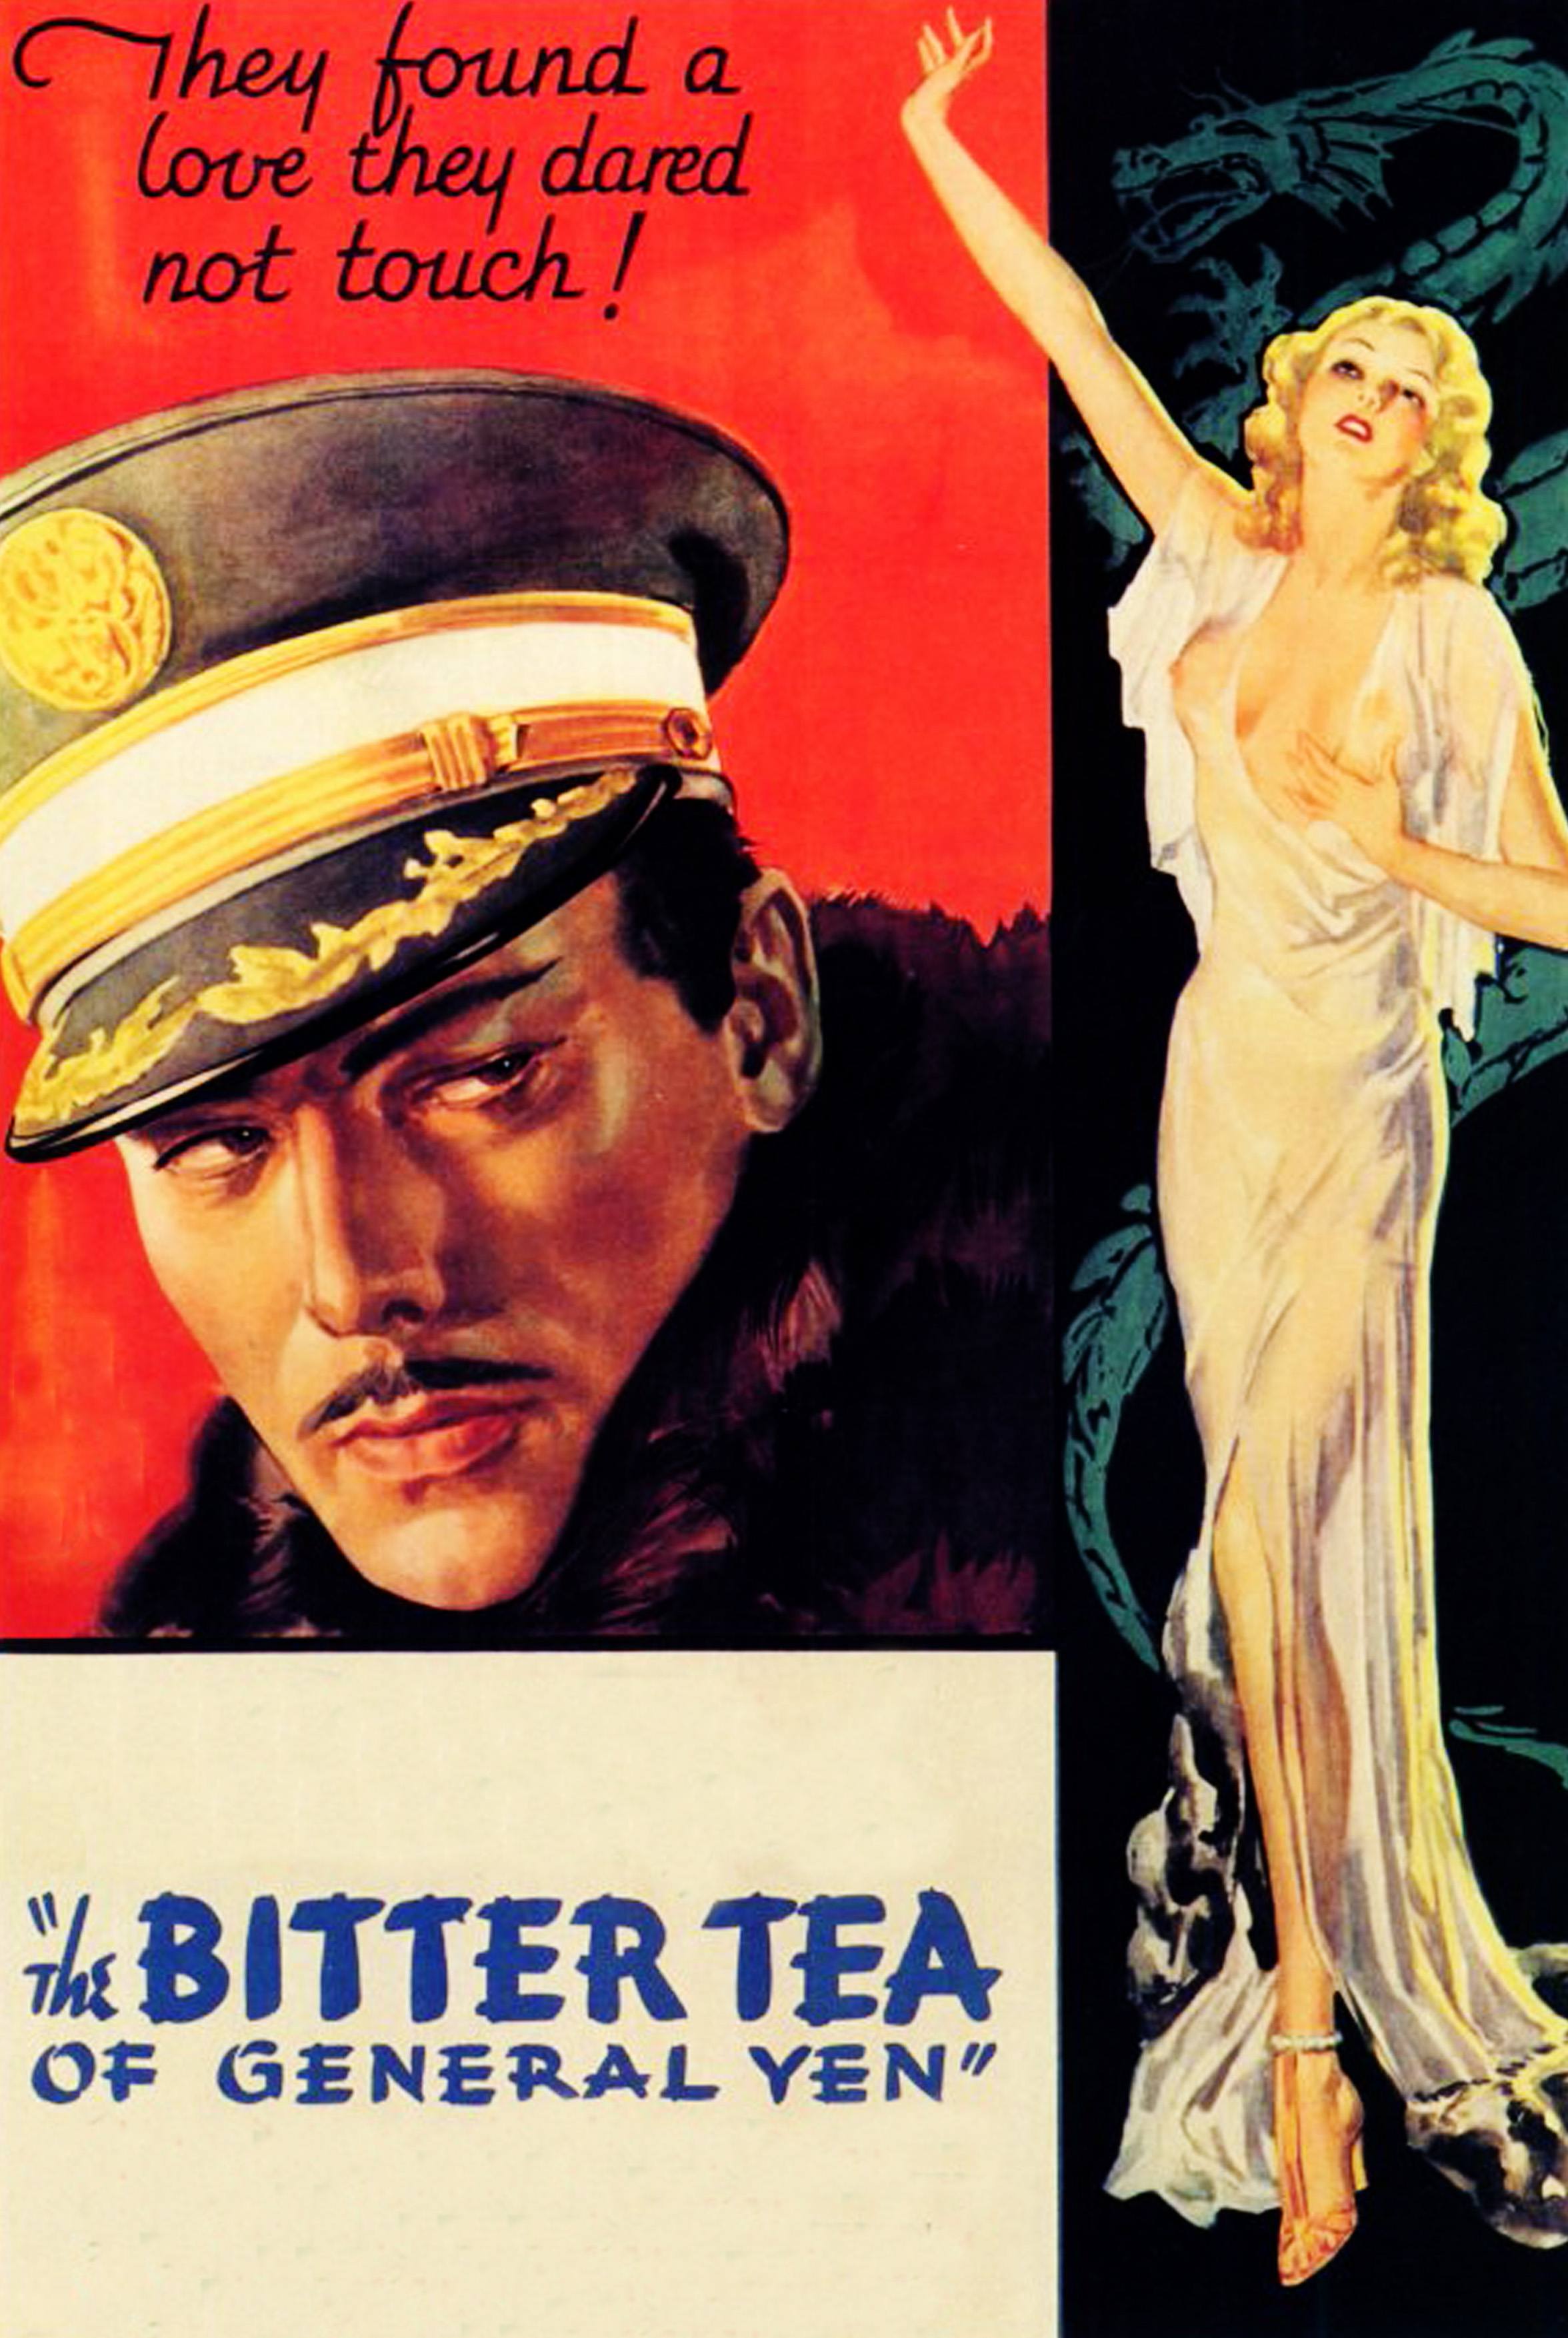 The Bitter tea of General Yen poster